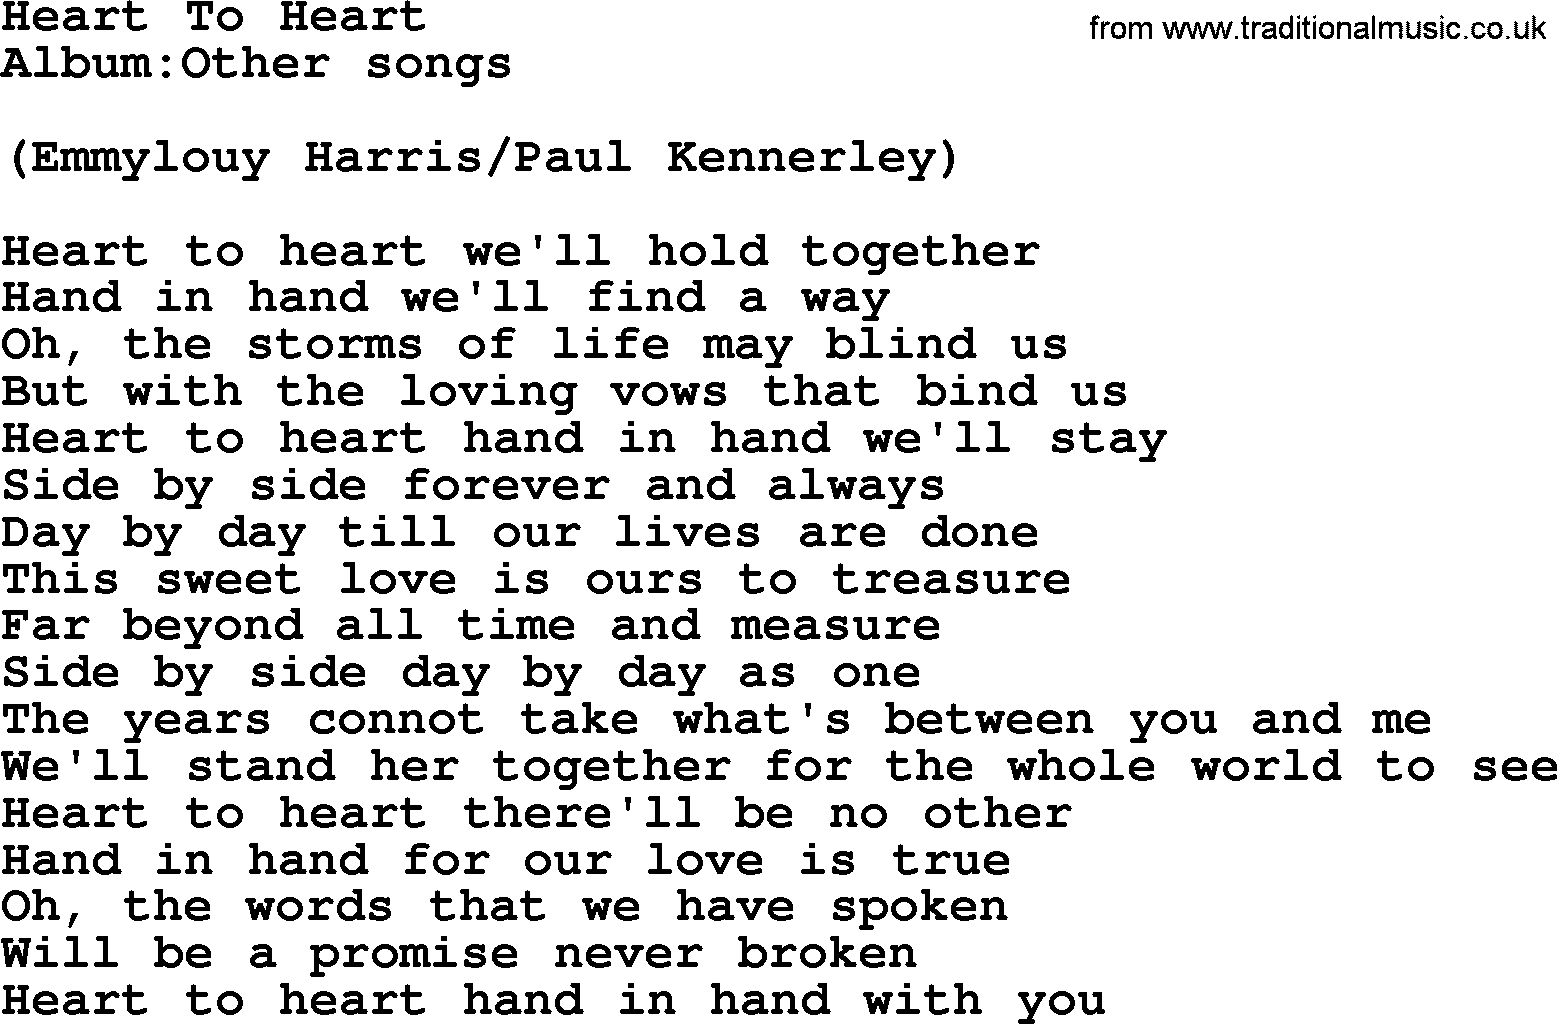 Emmylou Harris song: Heart To Heart lyrics